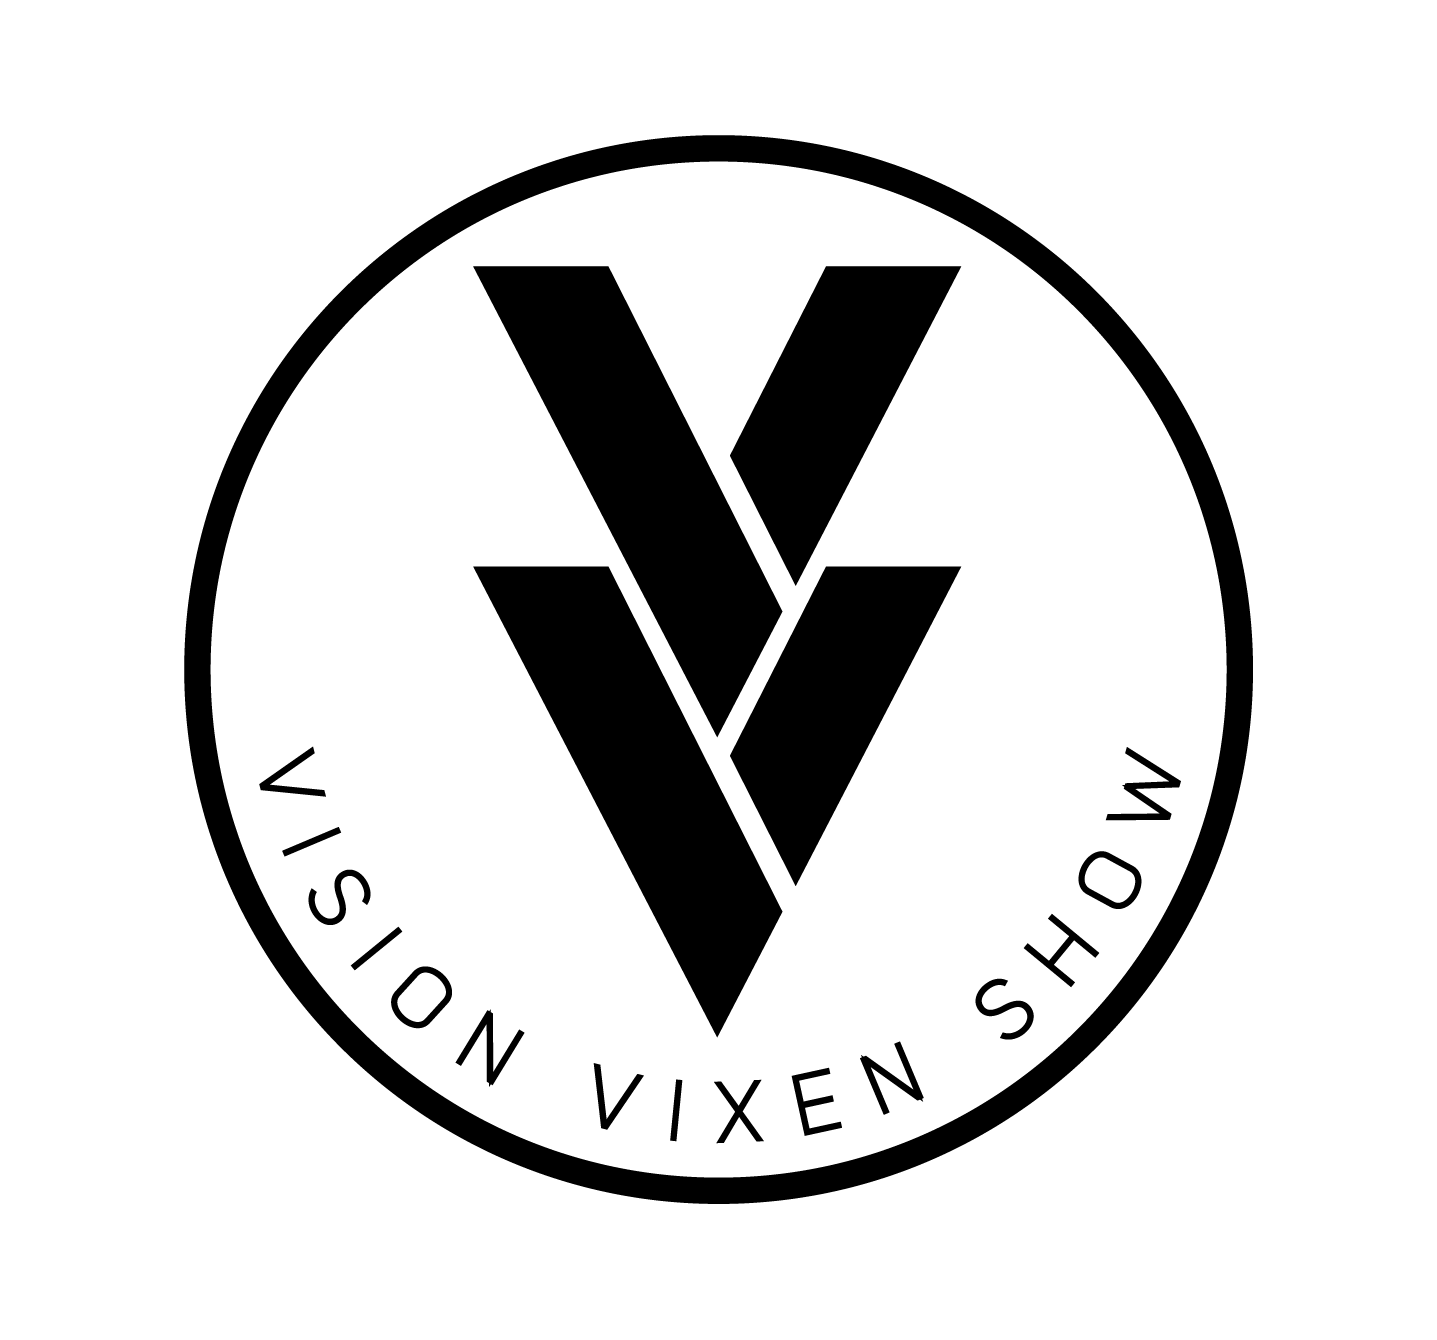 Vixen Valley Logo designs, themes, templates and downloadable